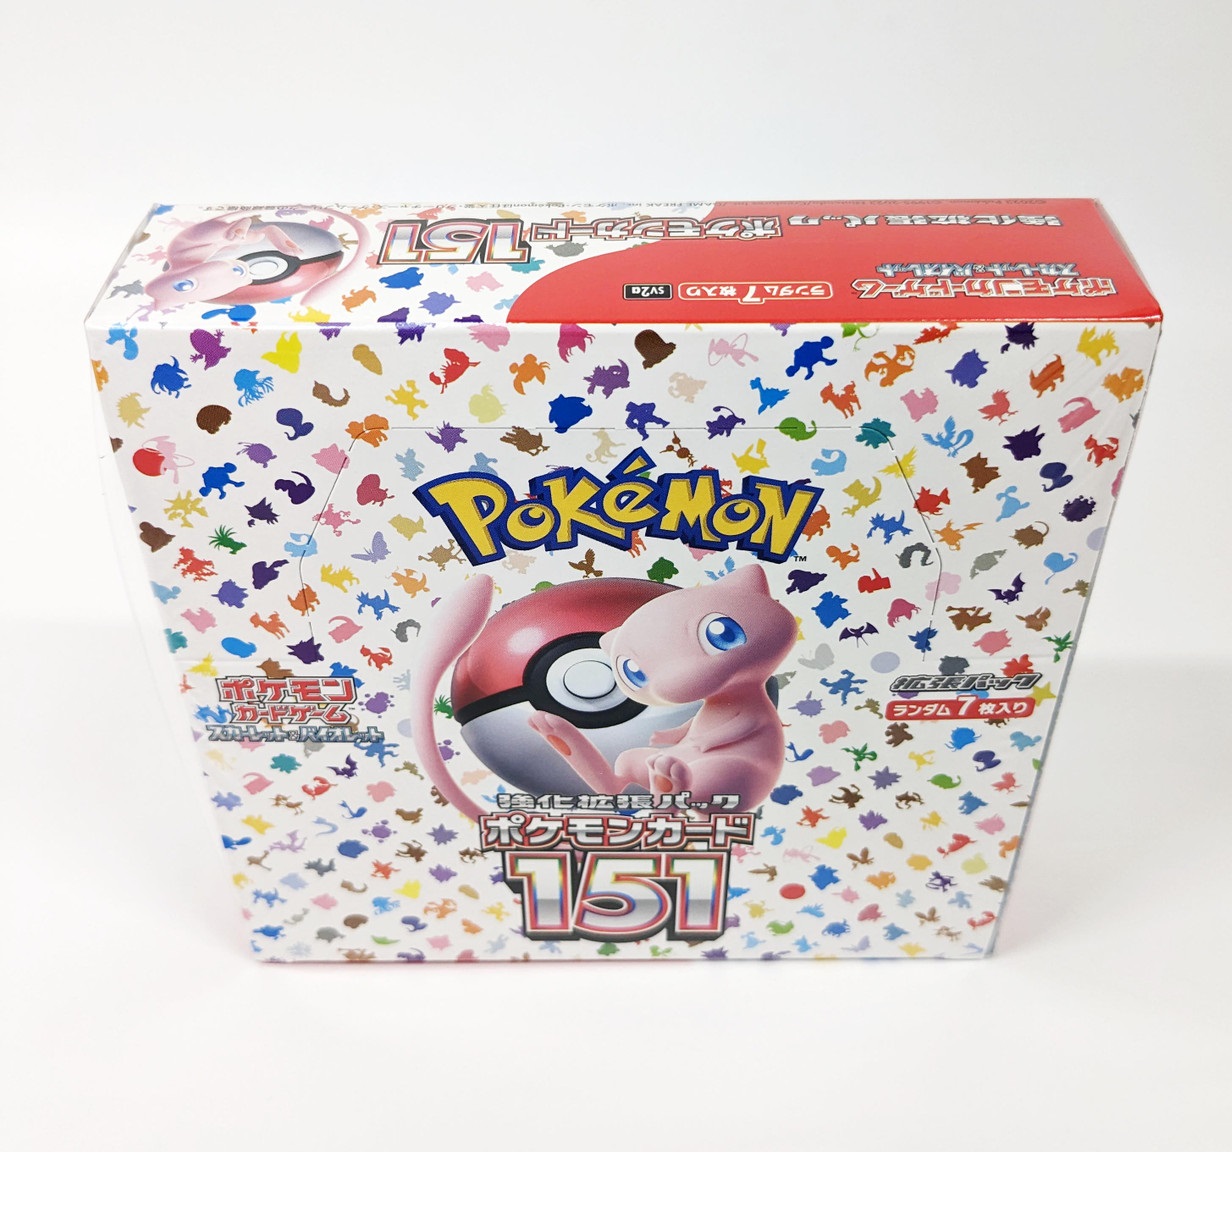 Japanese Pokémon 151 Booster Box - Cardtopia NZ